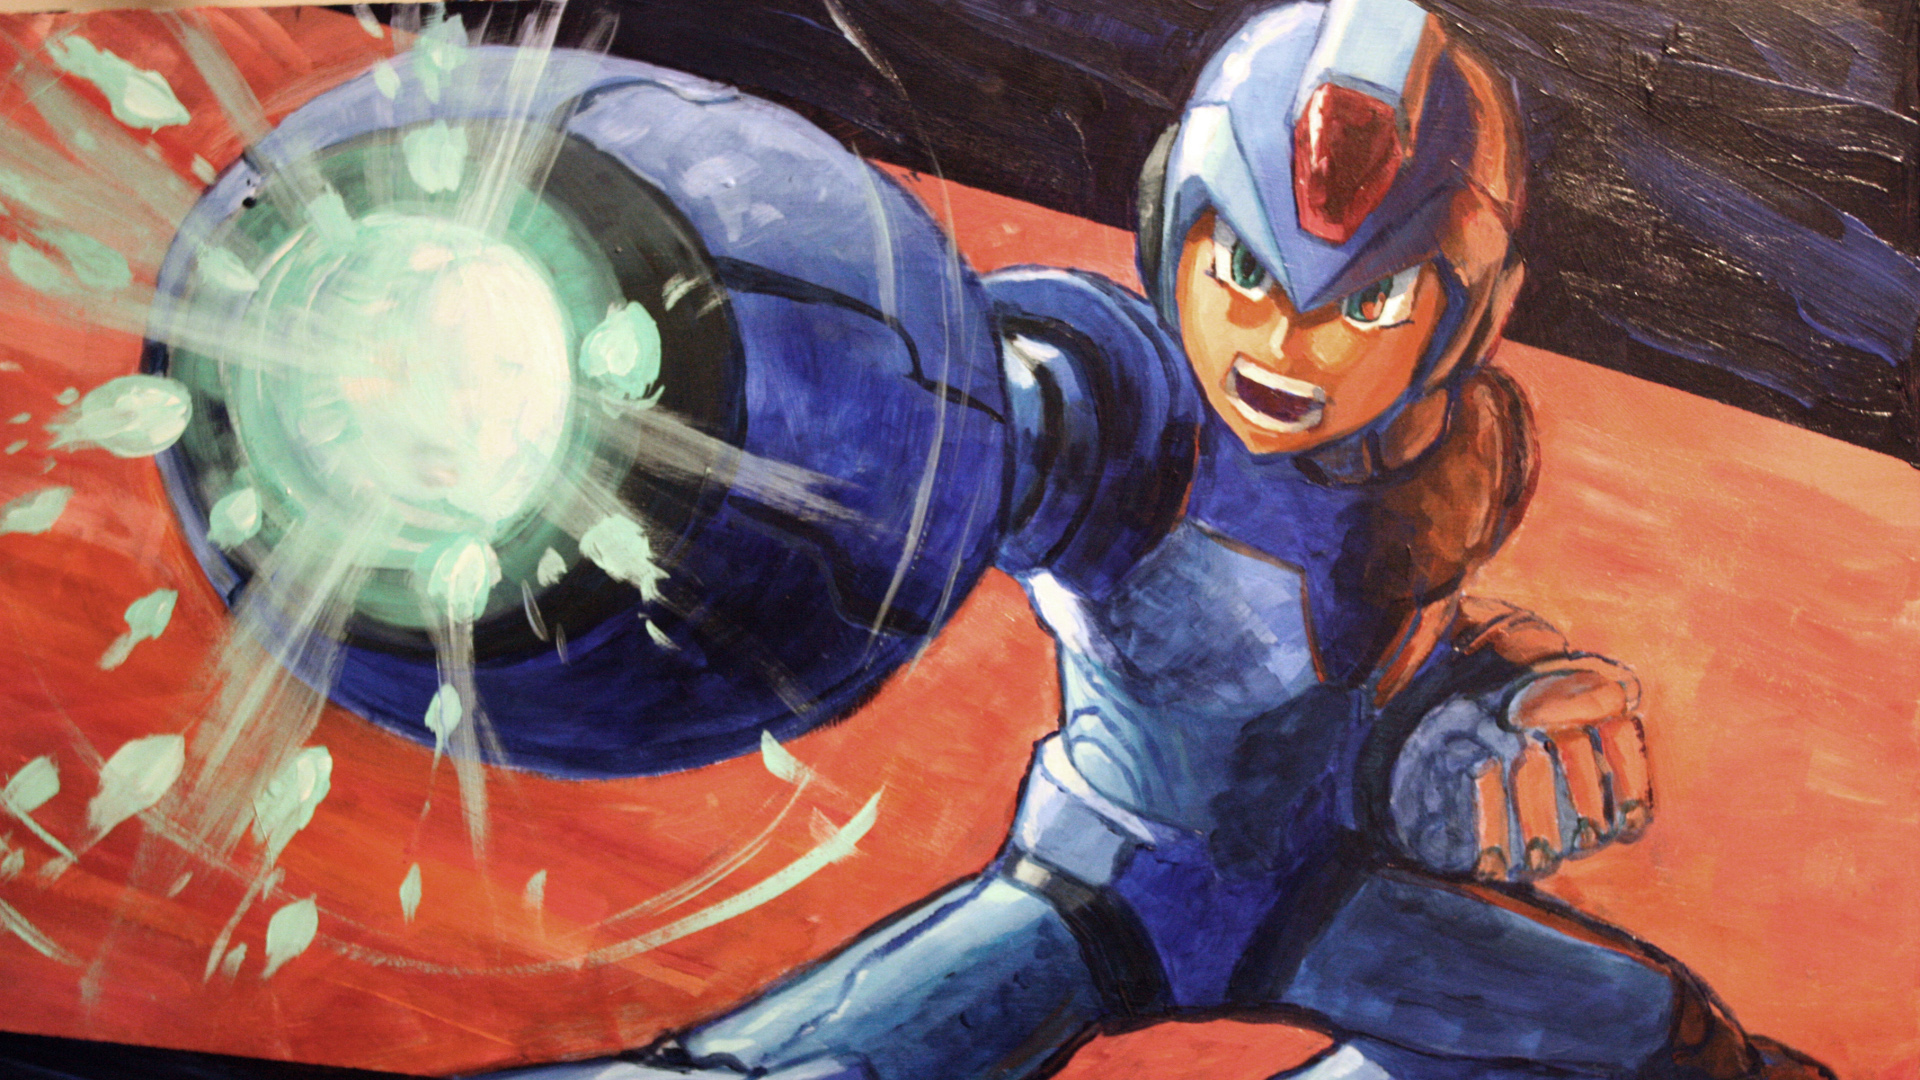 Video Game Mega Man X HD Wallpaper | Background Image